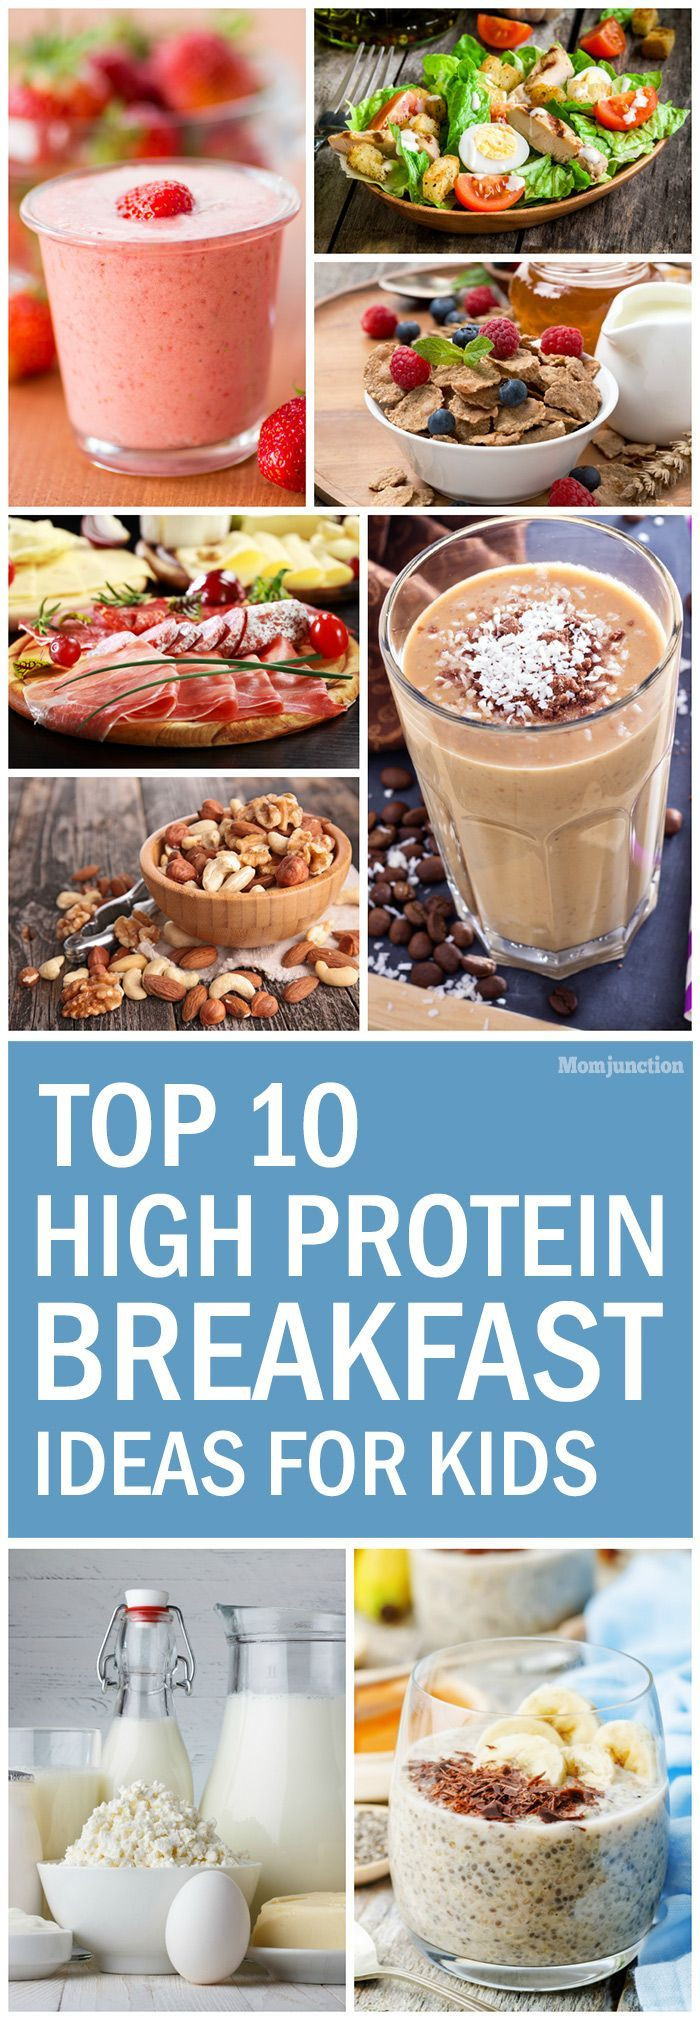 Protein Breakfast For Kids
 High Protein Breakfast For Kids Top 10 Ideas